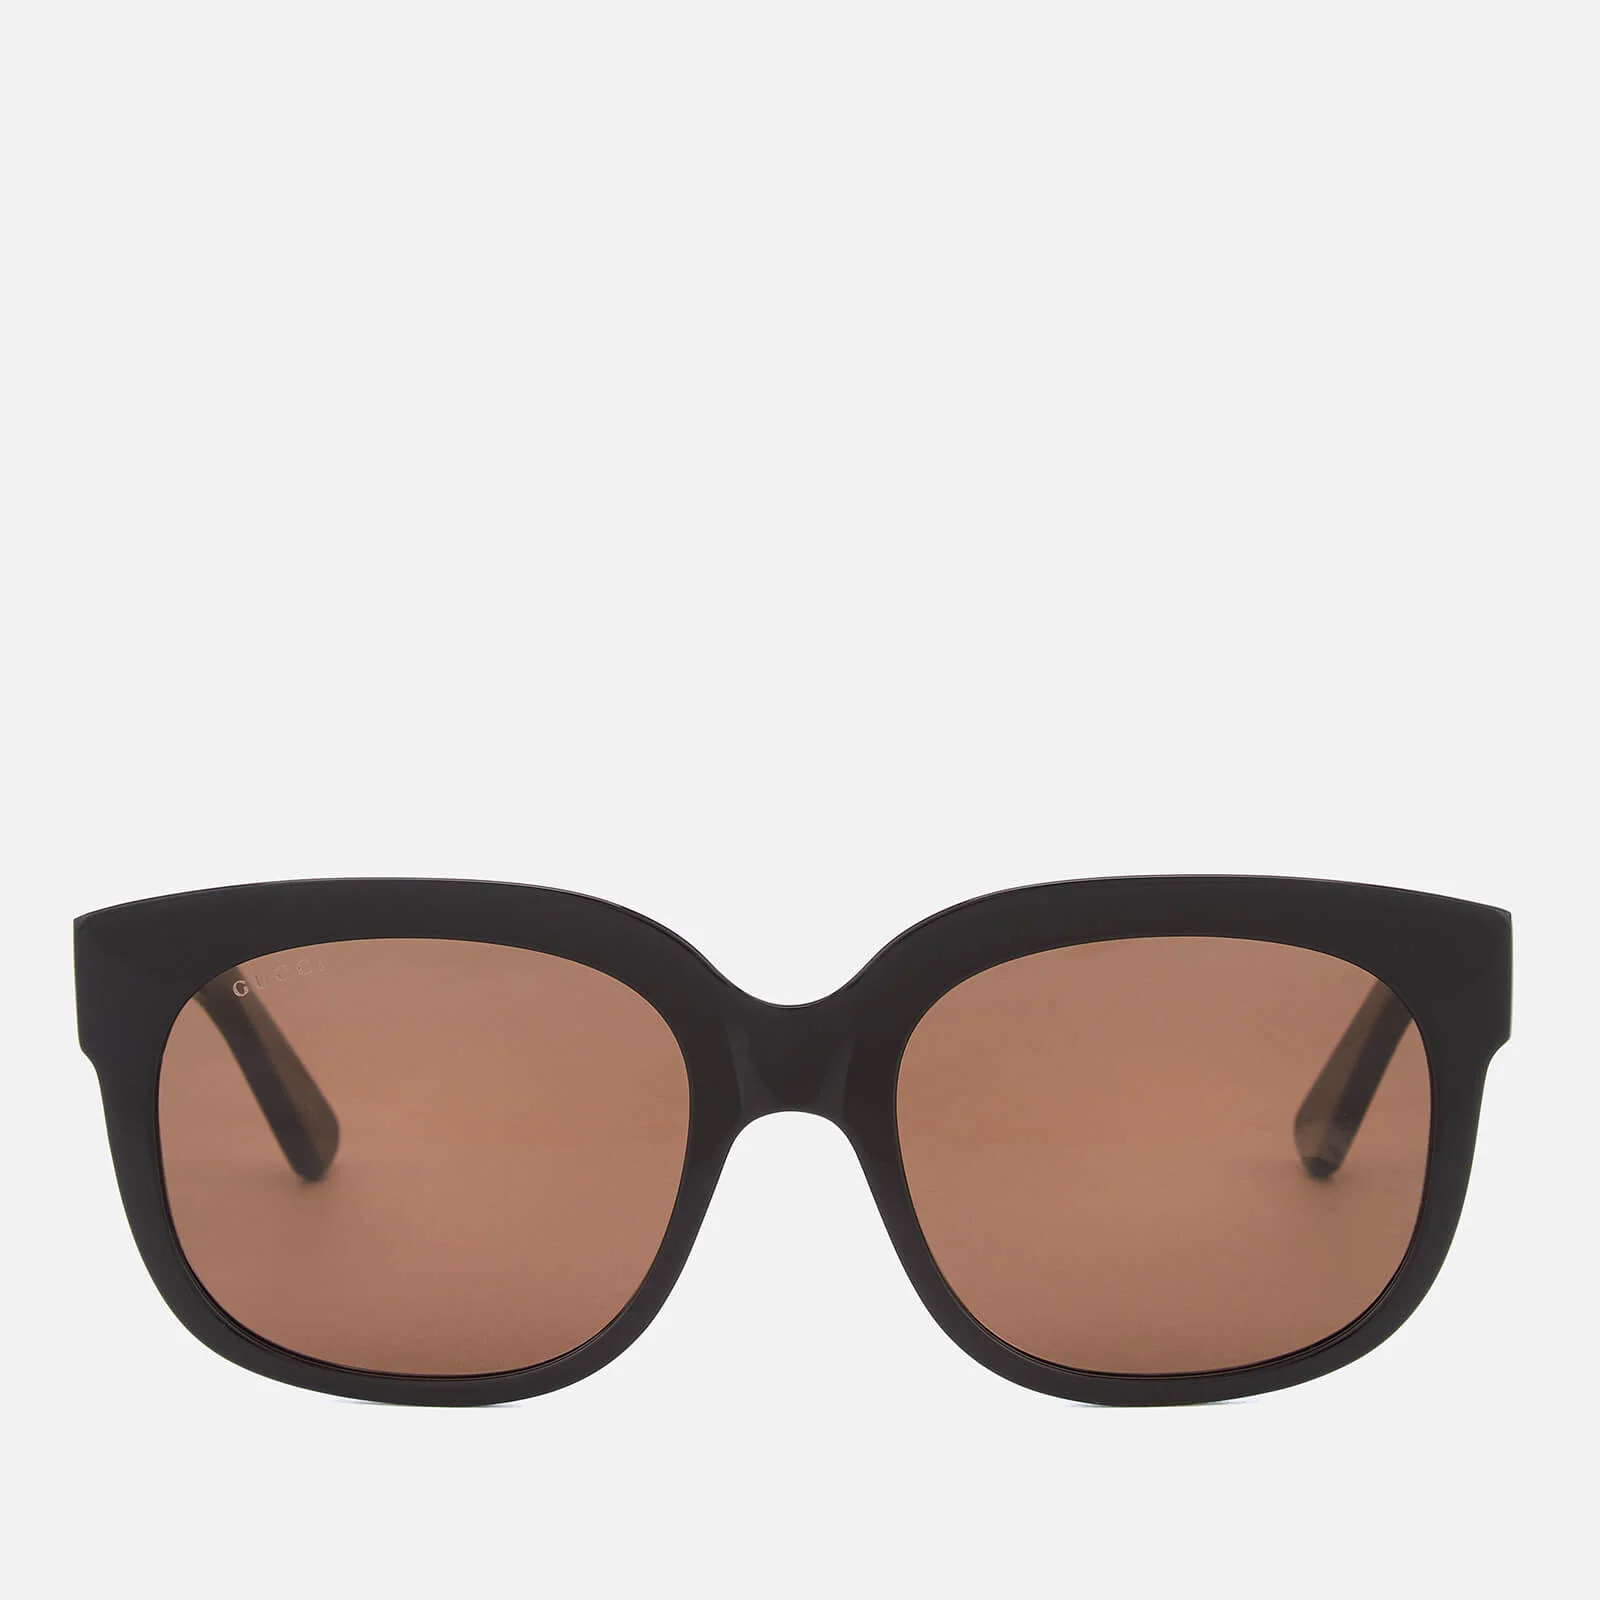 Gucci Women's Large Square Frame Sunglasses - Black Image 1